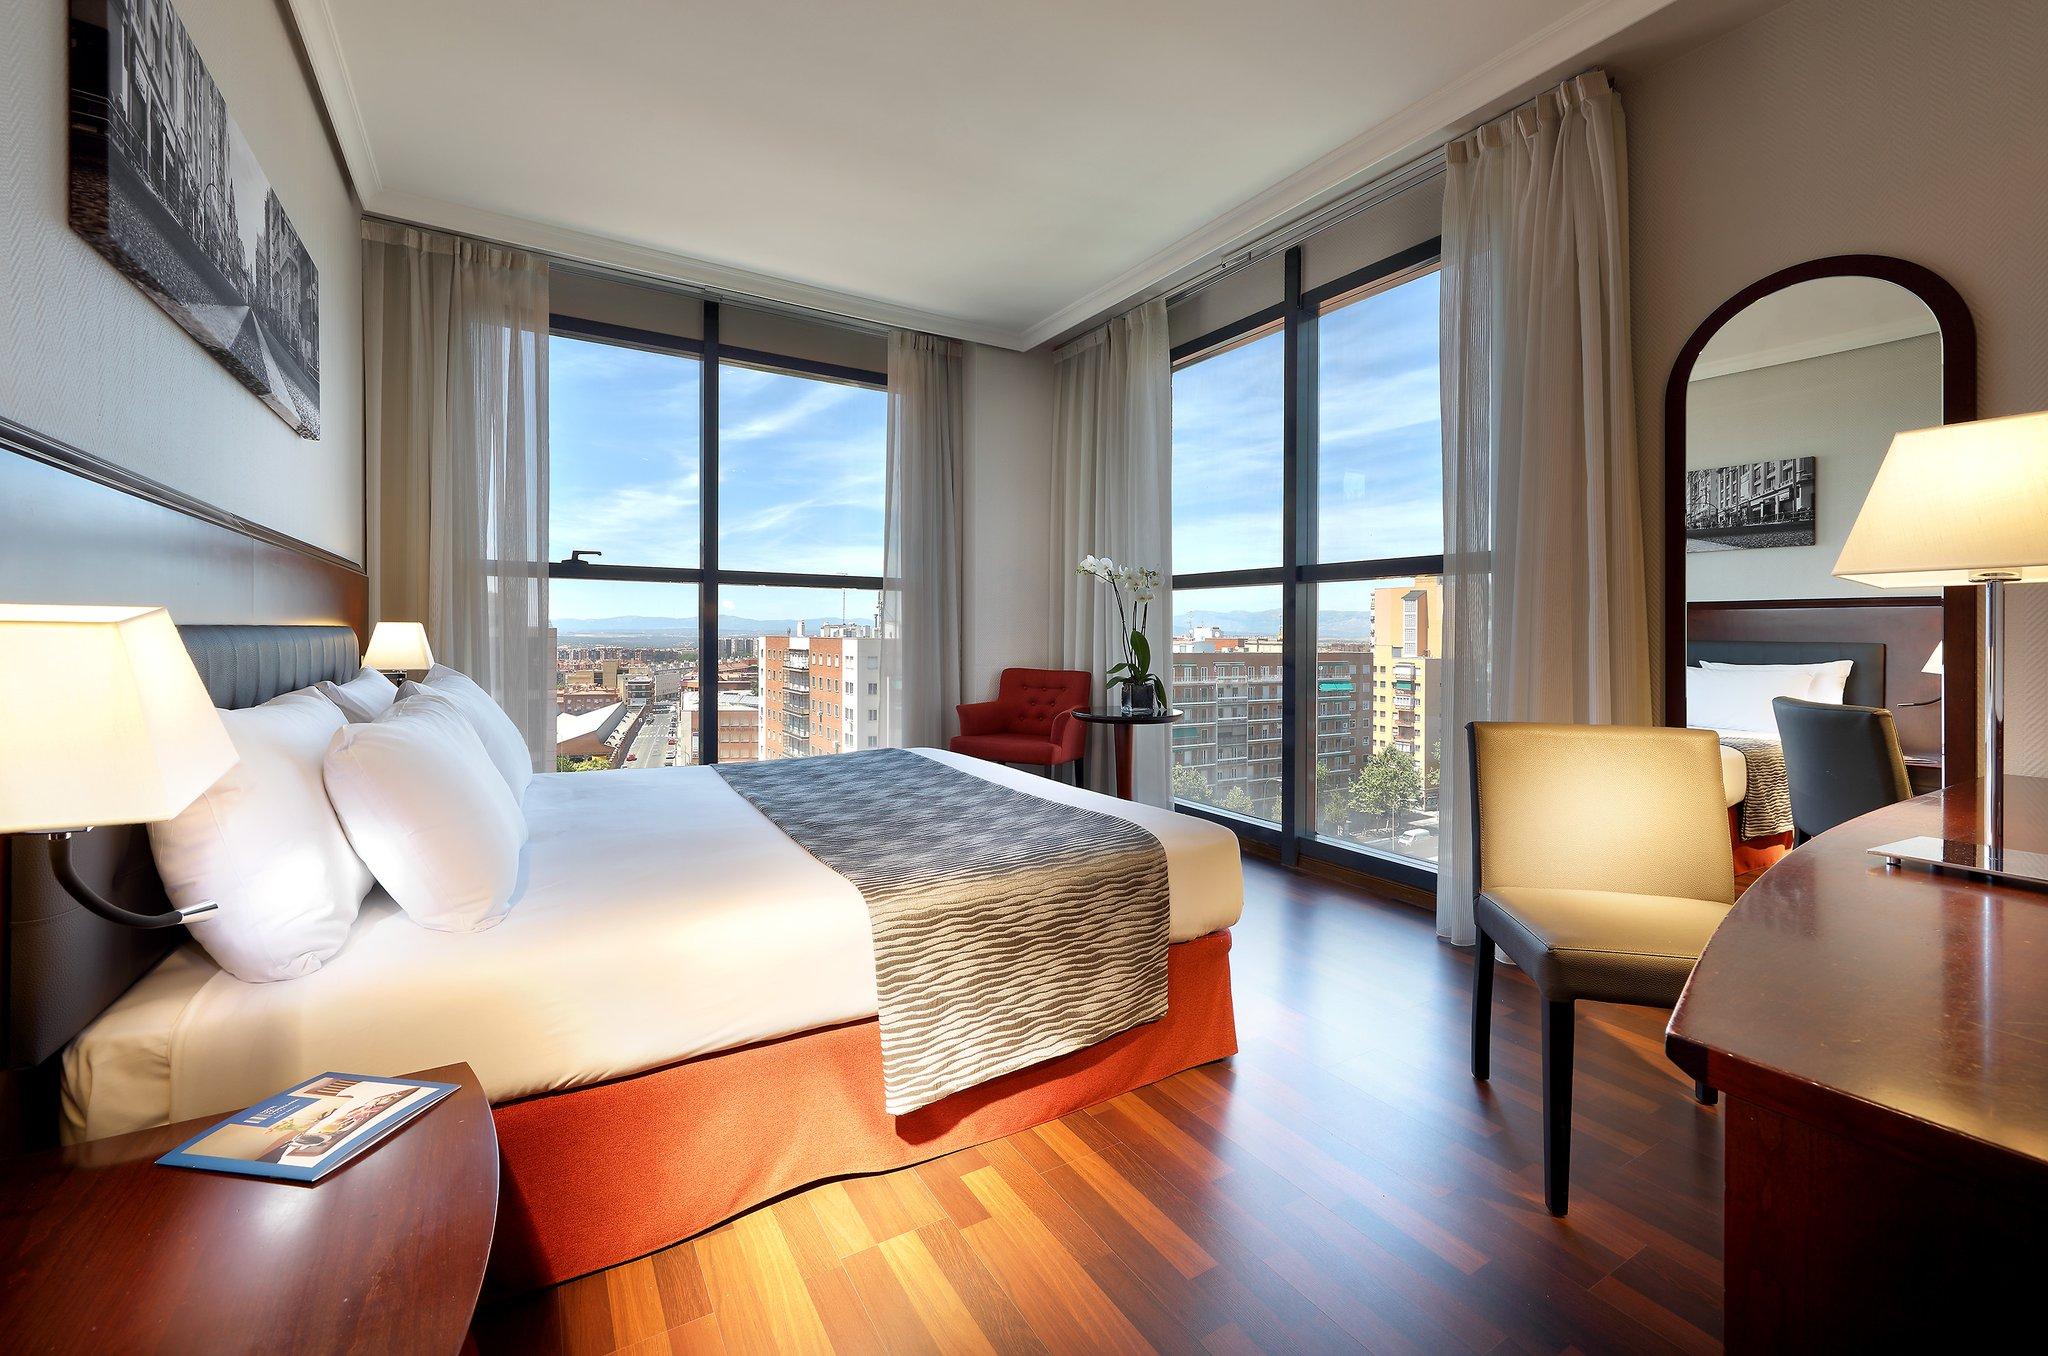 NH Príncipe de Vergara from $84. Madrid Hotel Deals & Reviews - KAYAK